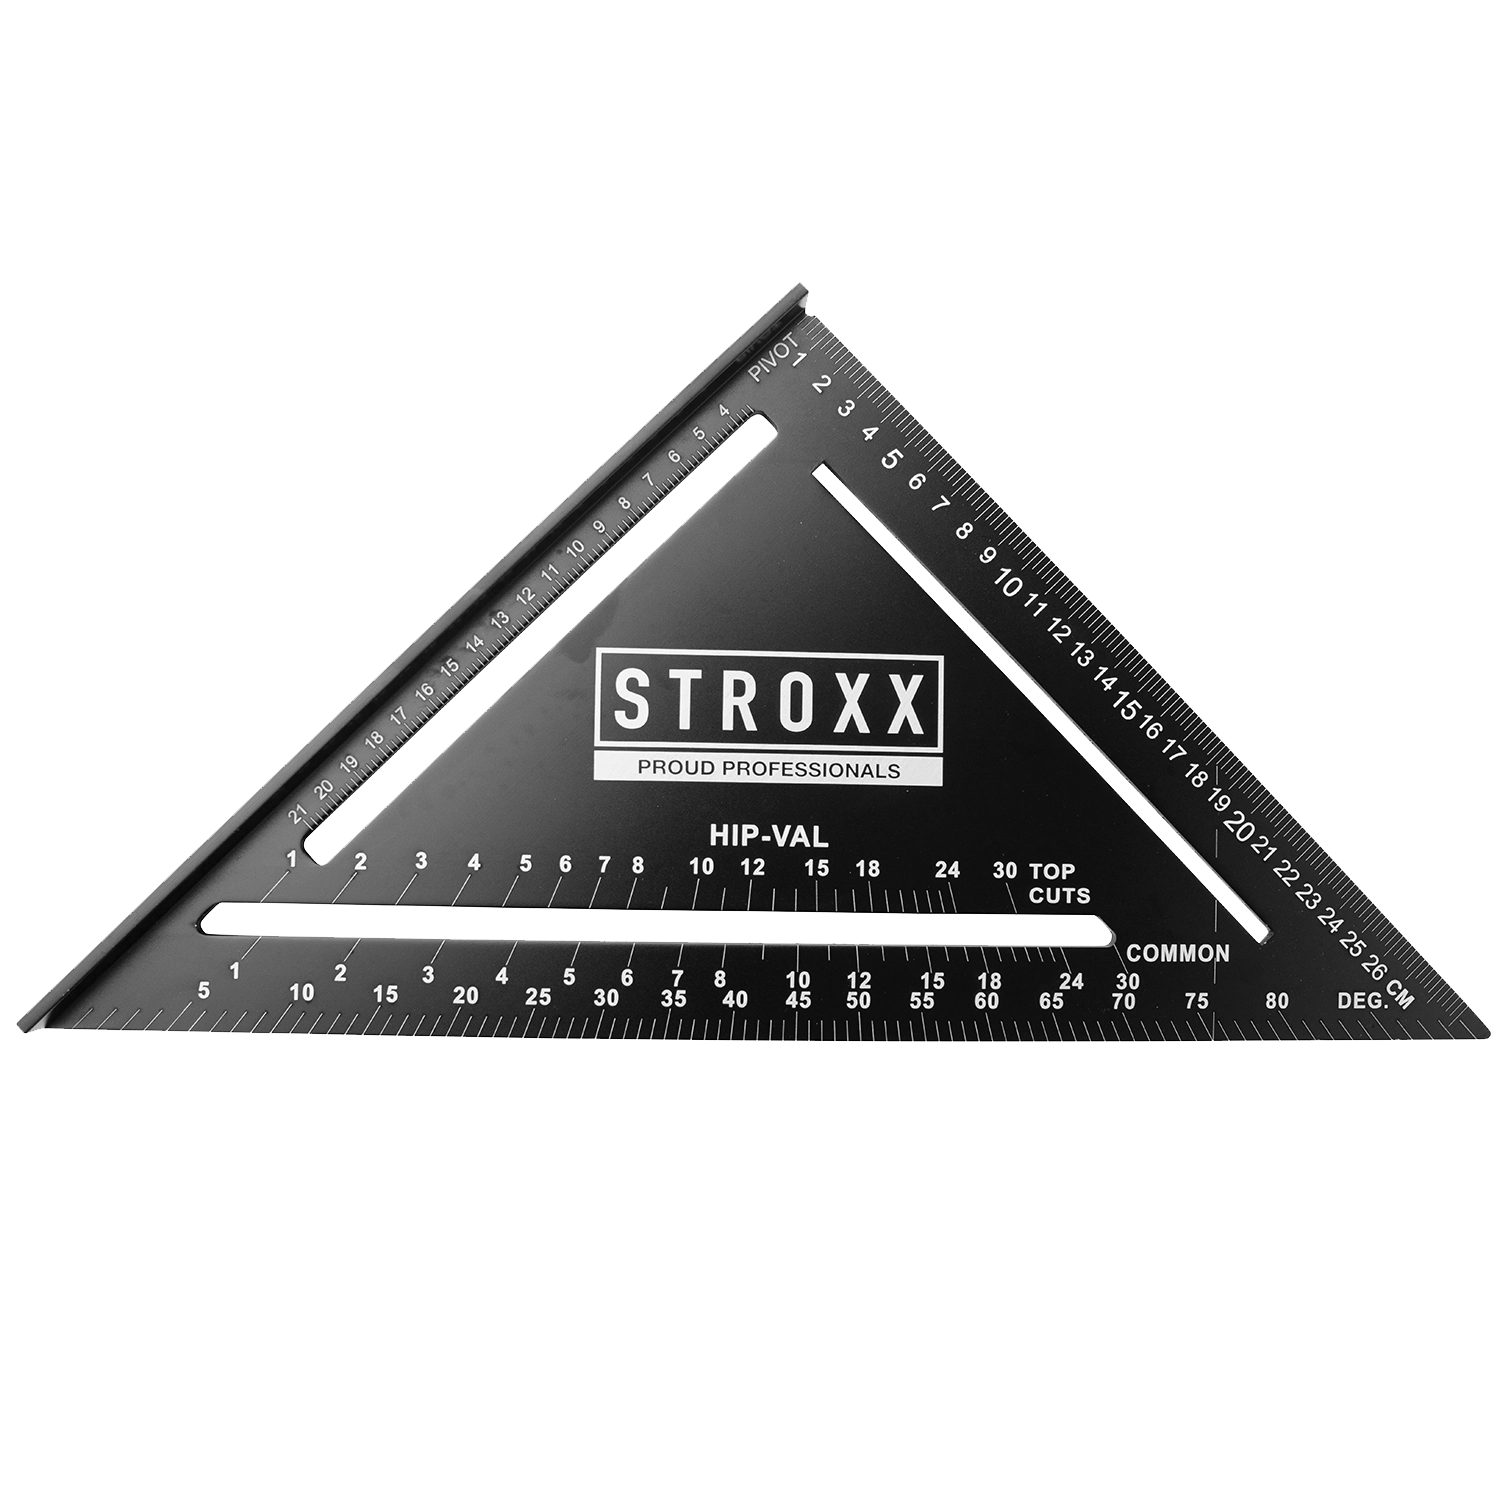 Zwarte STROXX bouwhaak. Grote aanduidingen afmetingen. Inkepingen. Groot wit STROXX logo.